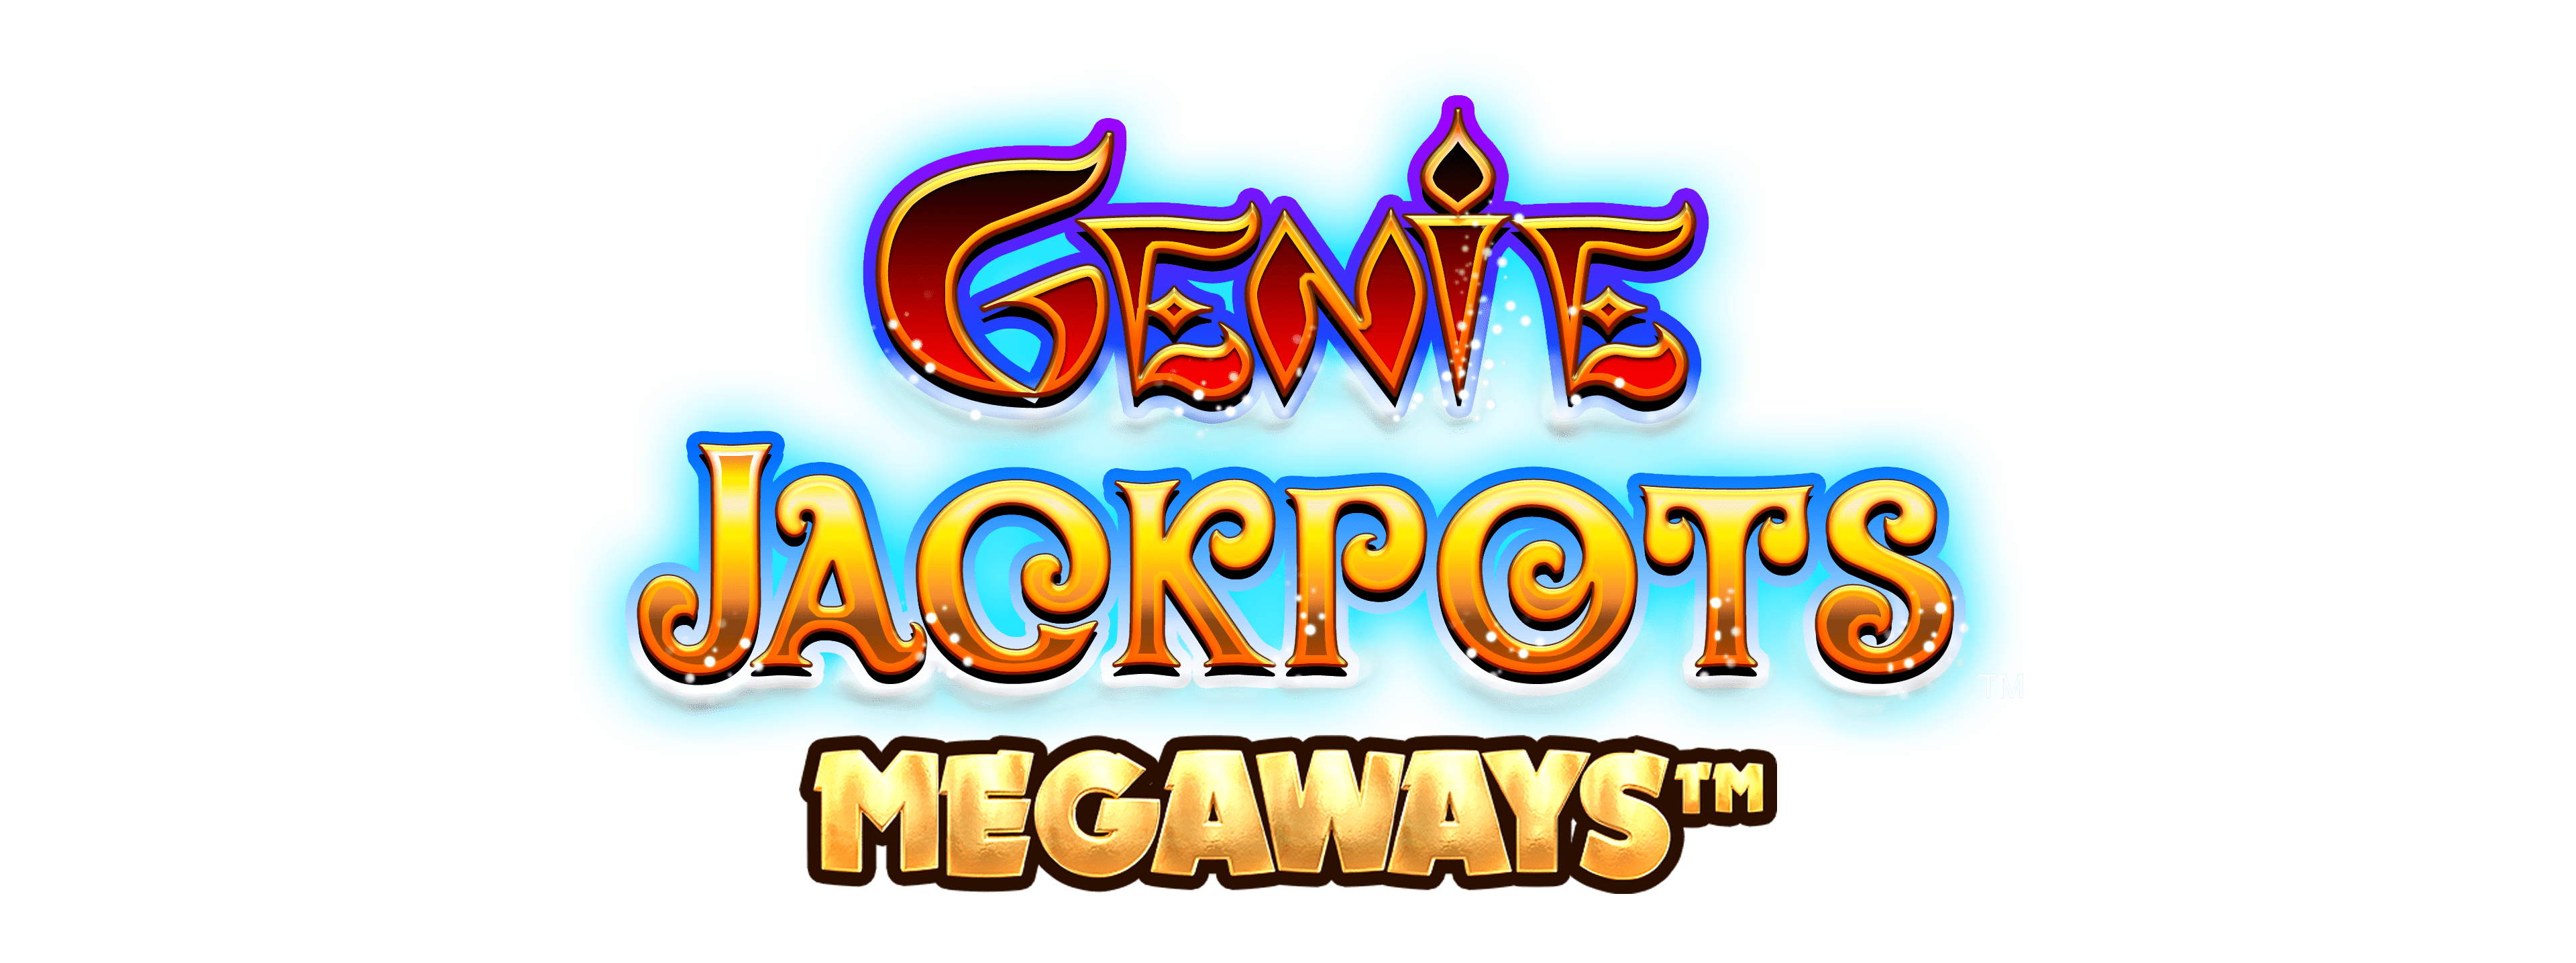 Genie Jackpots Megaways Slots Mega Ways